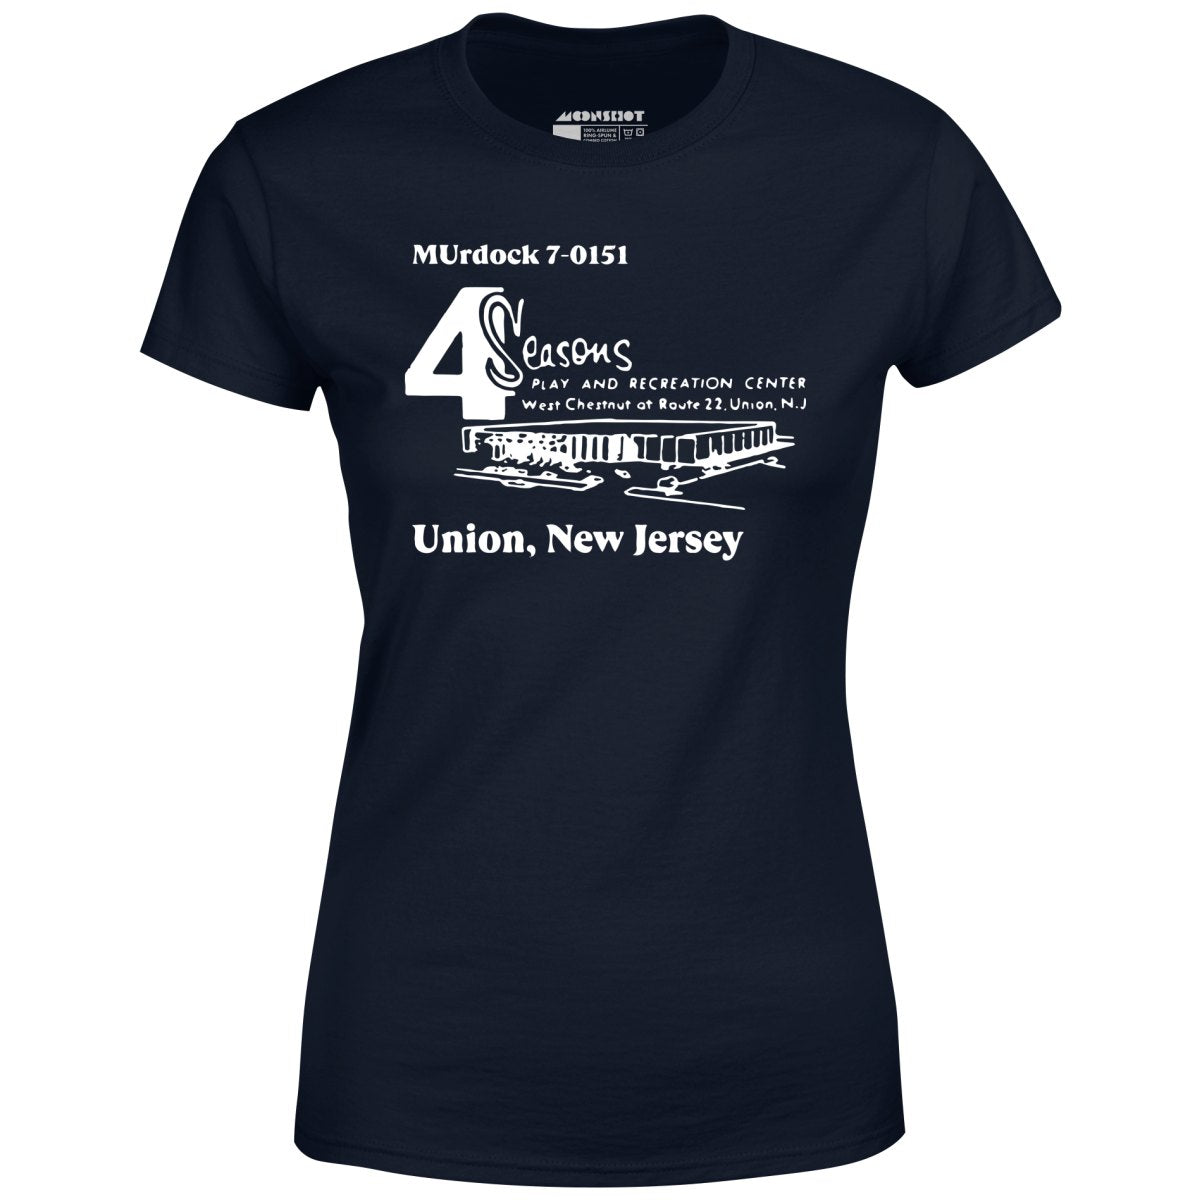 4 Seasons - Union, NJ - Vintage Bowling Alley - Women's T-Shirt